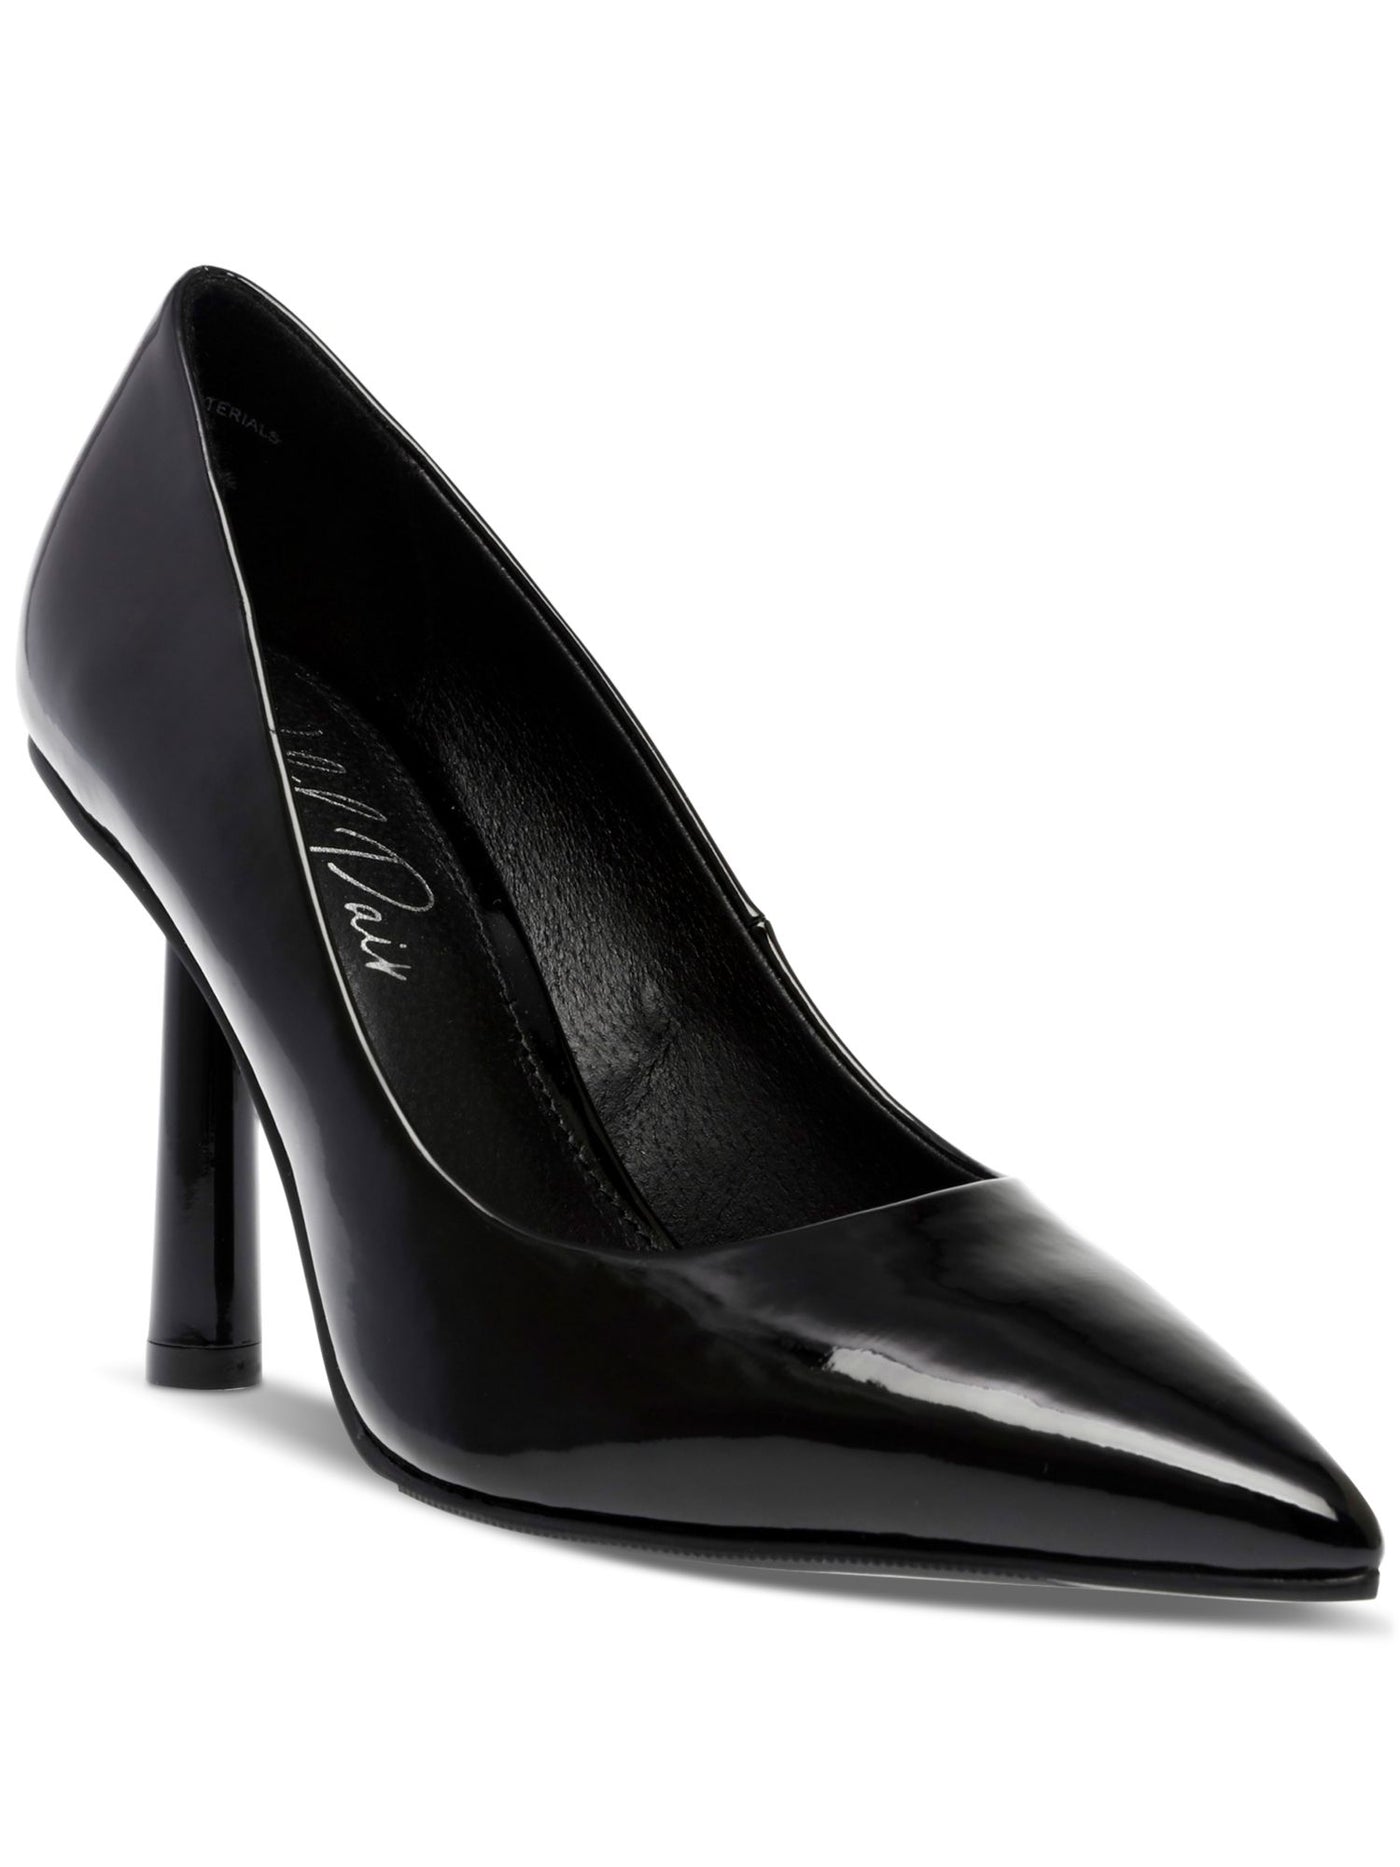 WILD PAIR Womens Black Slip Resistant Comfort Taraa Pointed Toe Stiletto Slip On Pumps Shoes 8 M